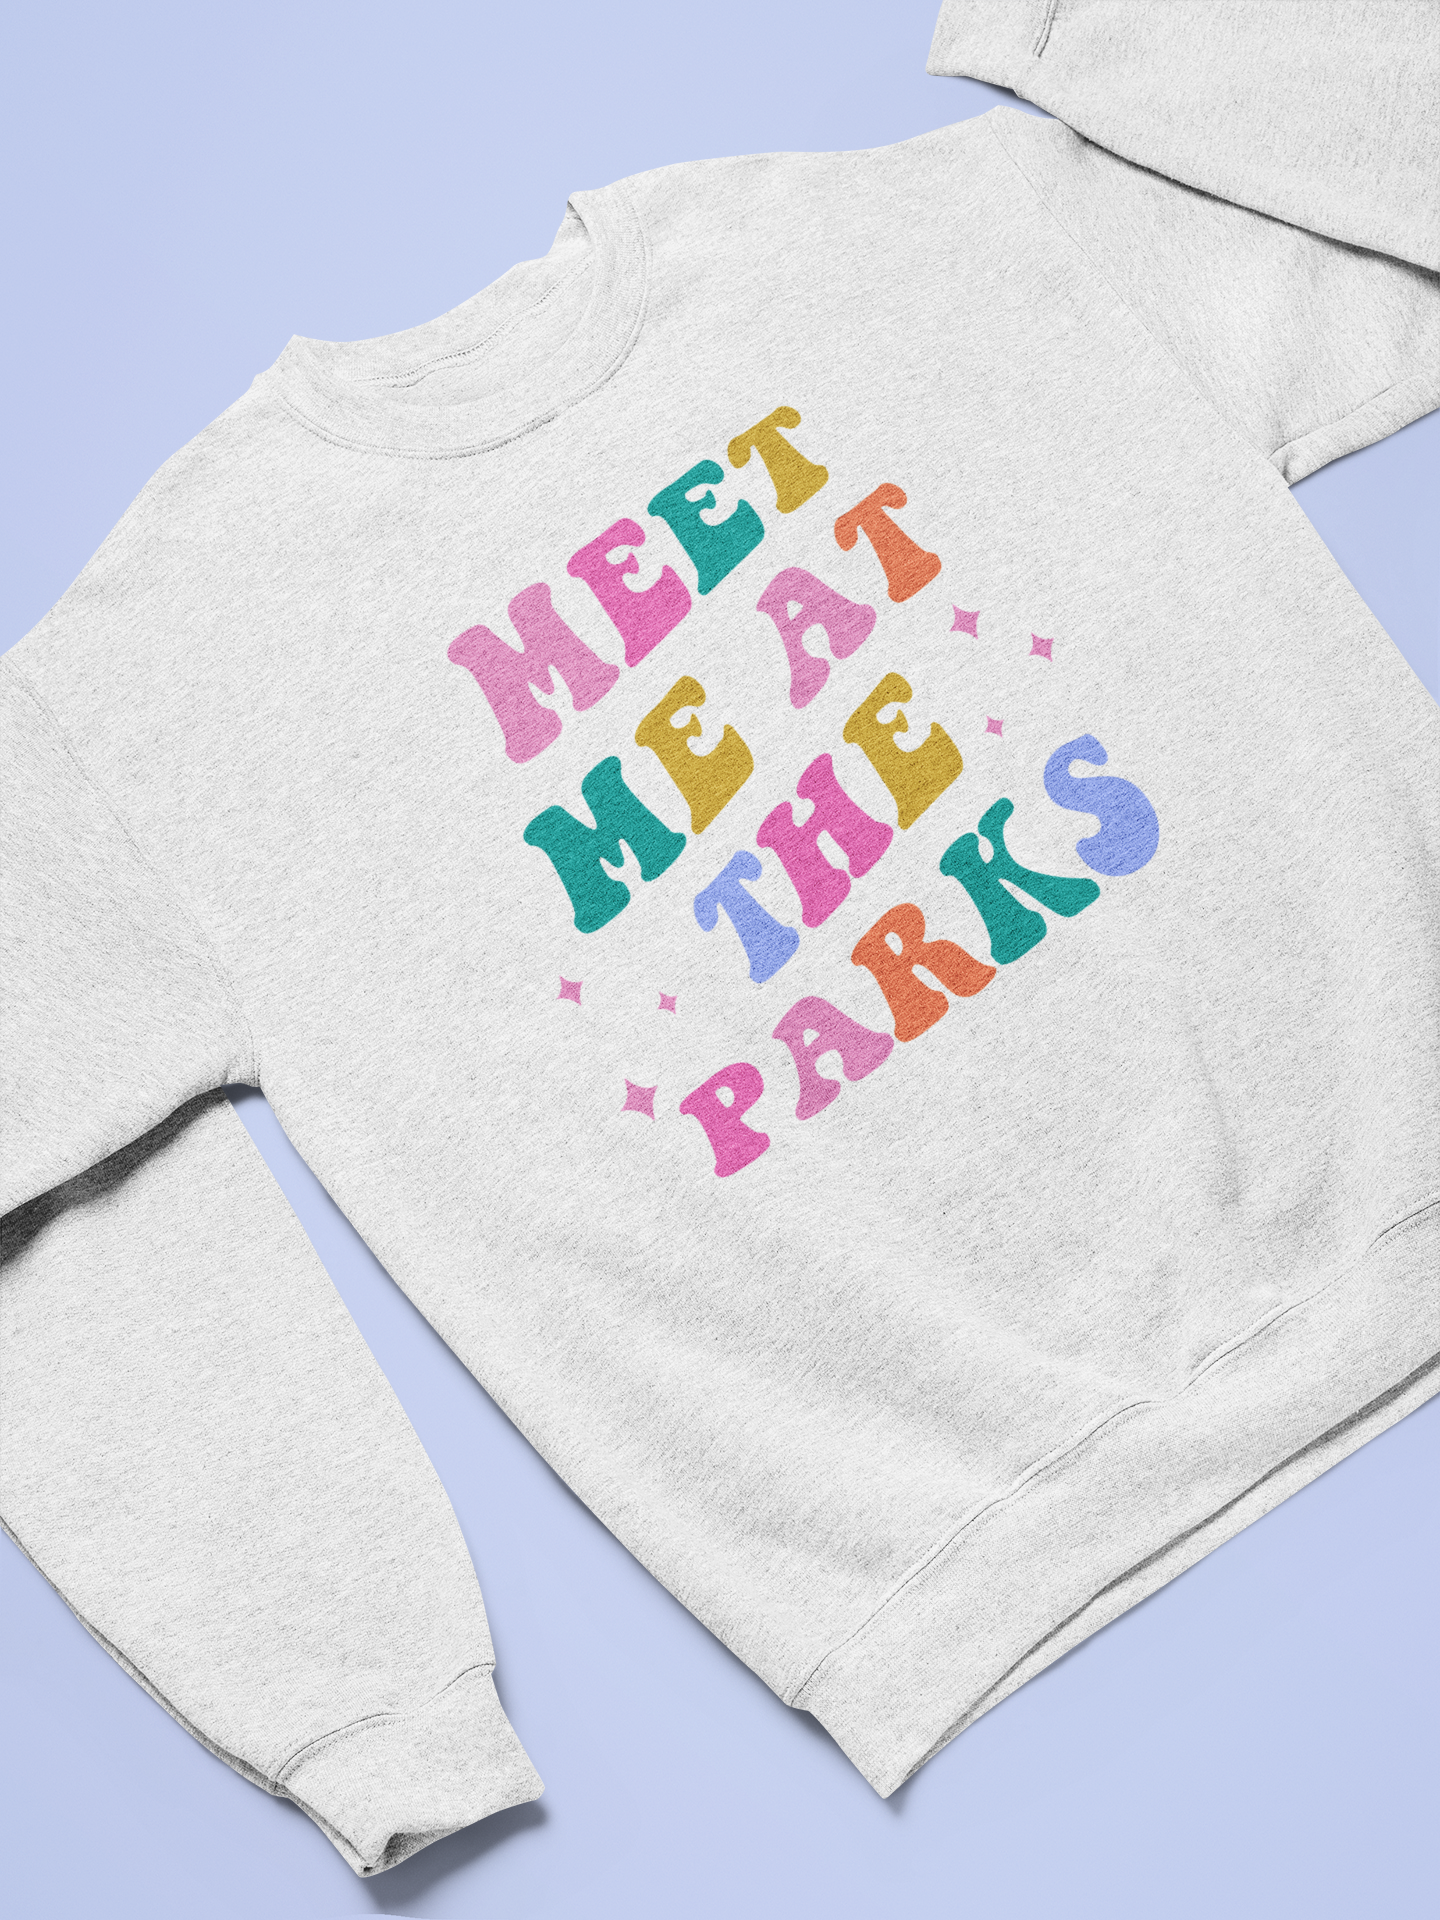 Meet Me at the Parks Sweatshirt